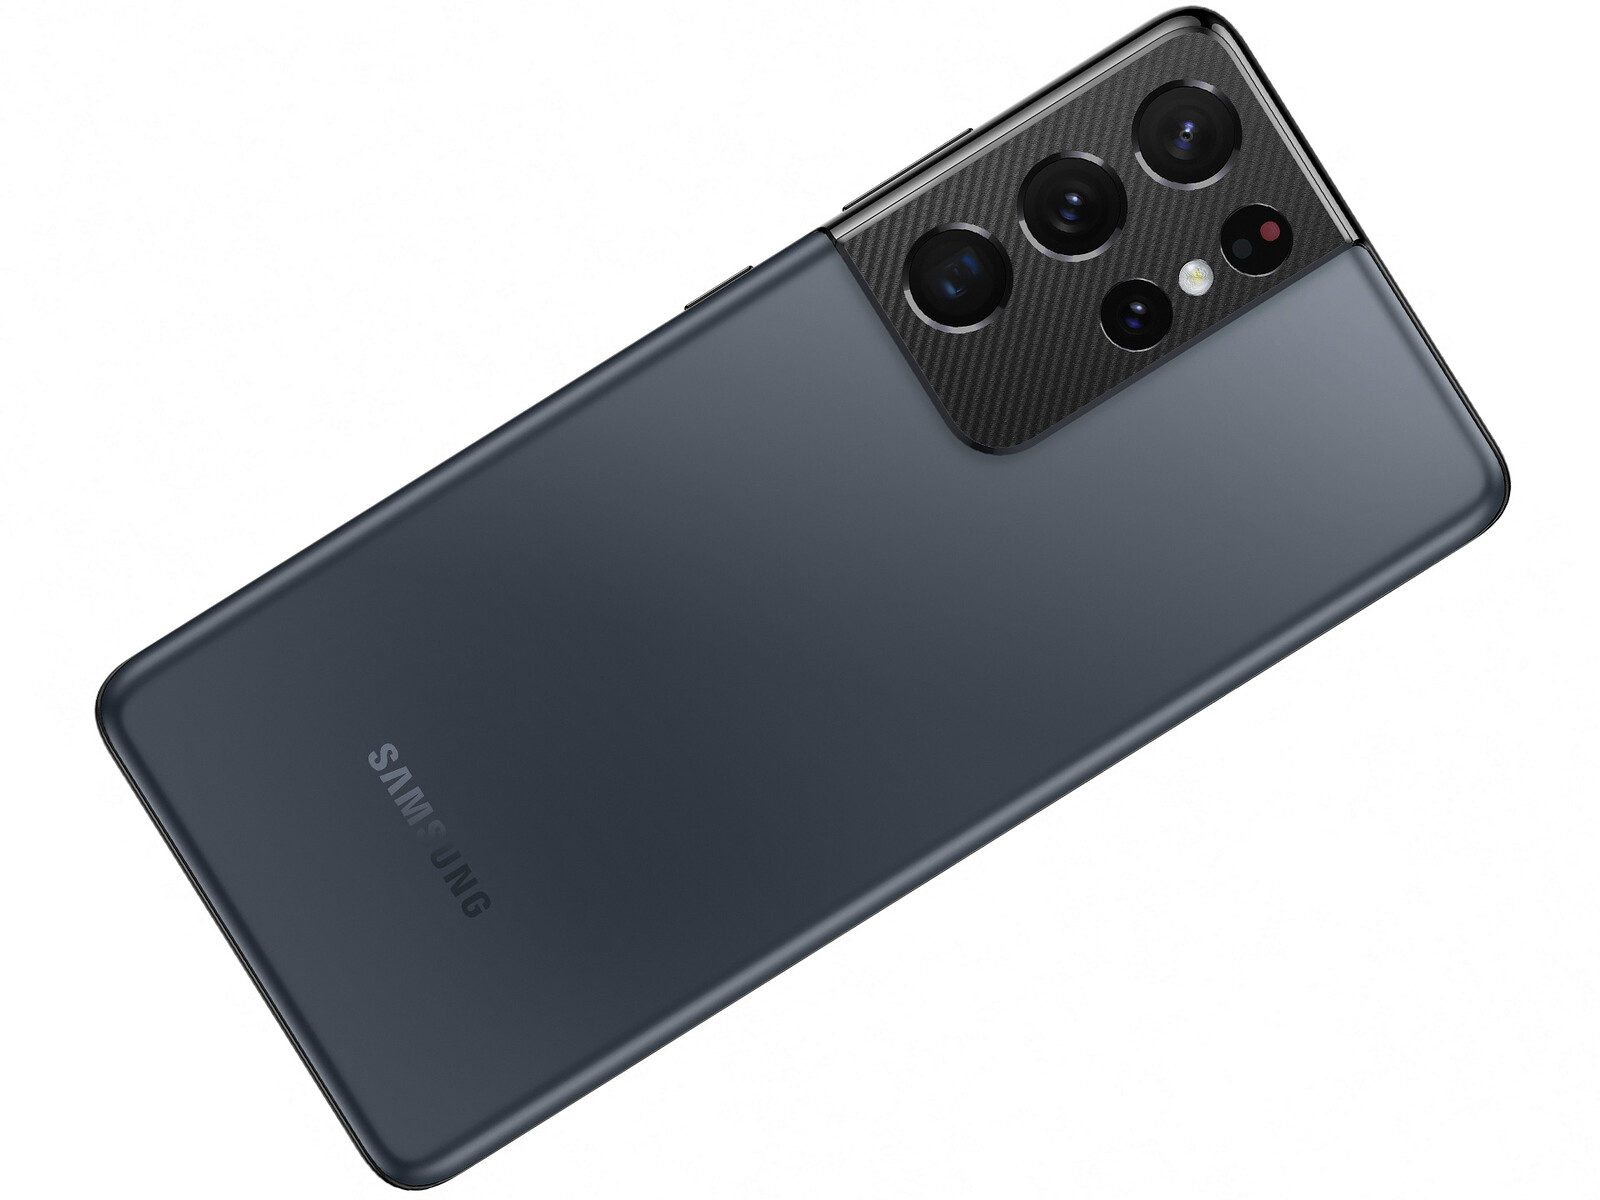 Samsung Galaxy S21 5G (Exynos) Camera review: S-series base model - DXOMARK